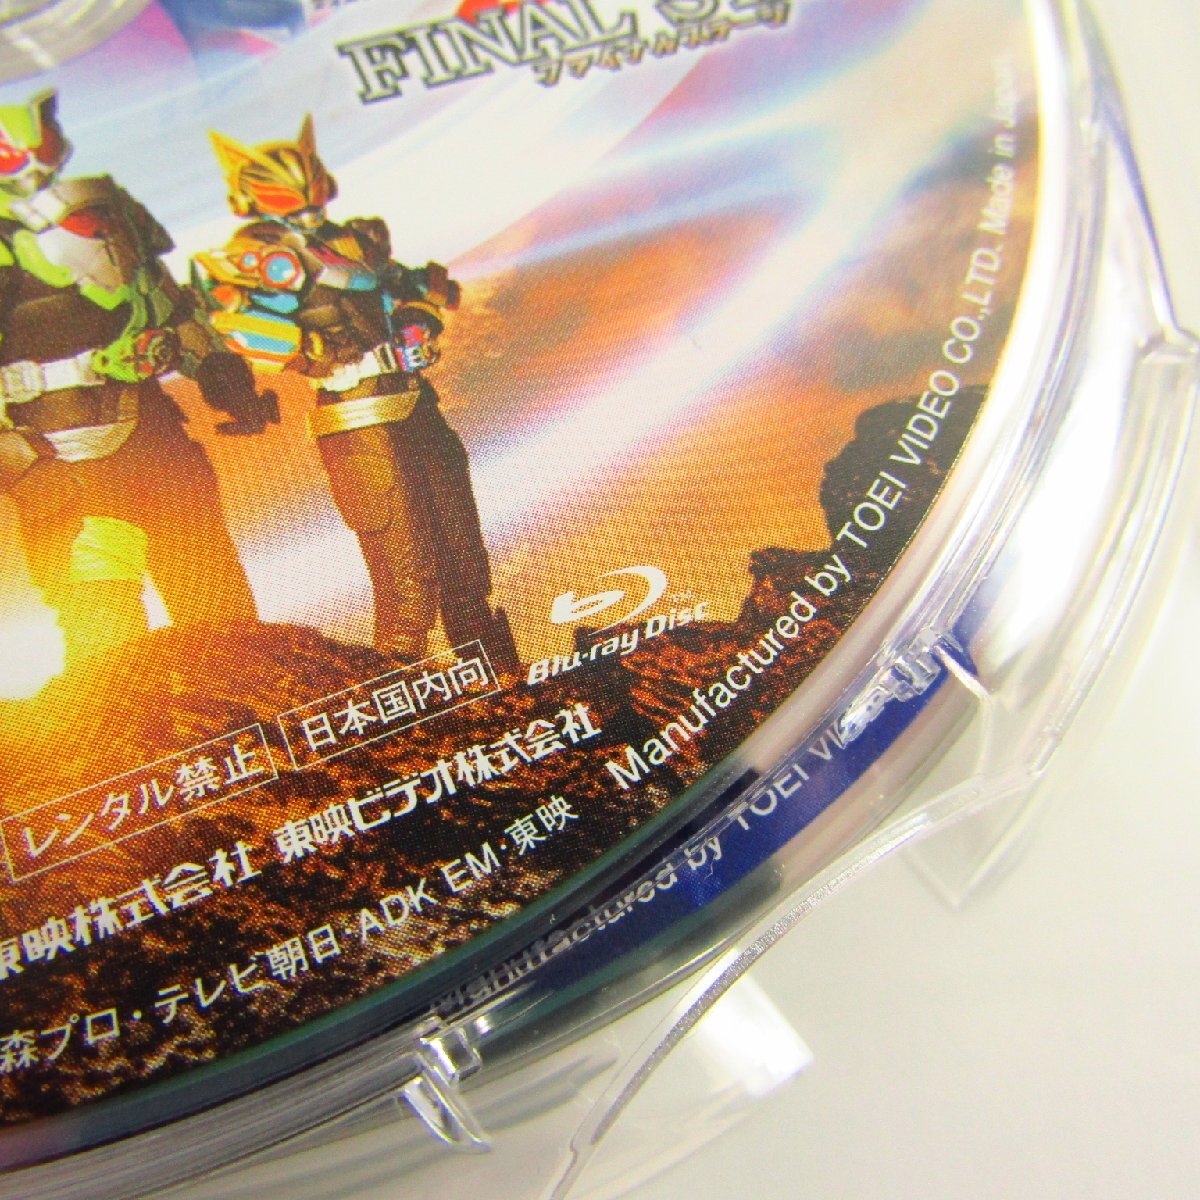  Kamen Rider gi-tsu Final Stage DX Final Stage звук core ID комплект версия первый раз производство ограничение Blu-ray =A1217